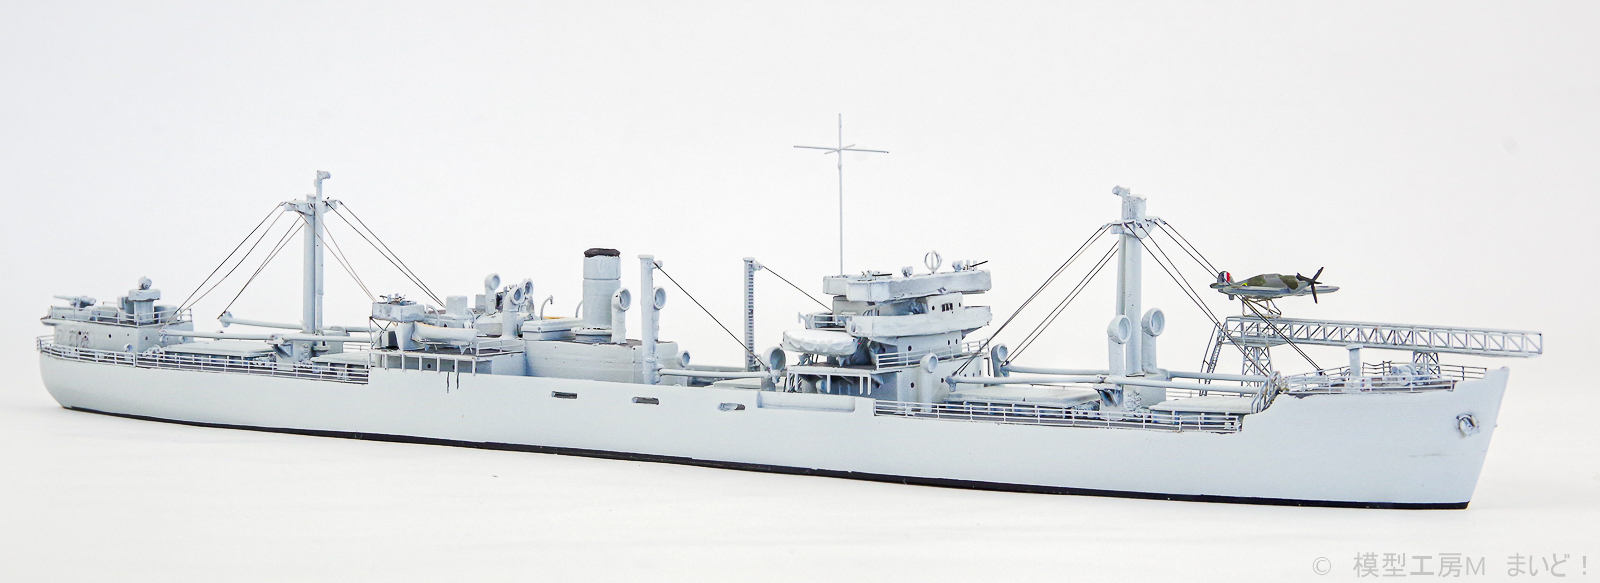 NIKOモデル 1/700 イギリス海軍 CAMシップ エンパイア 完成品